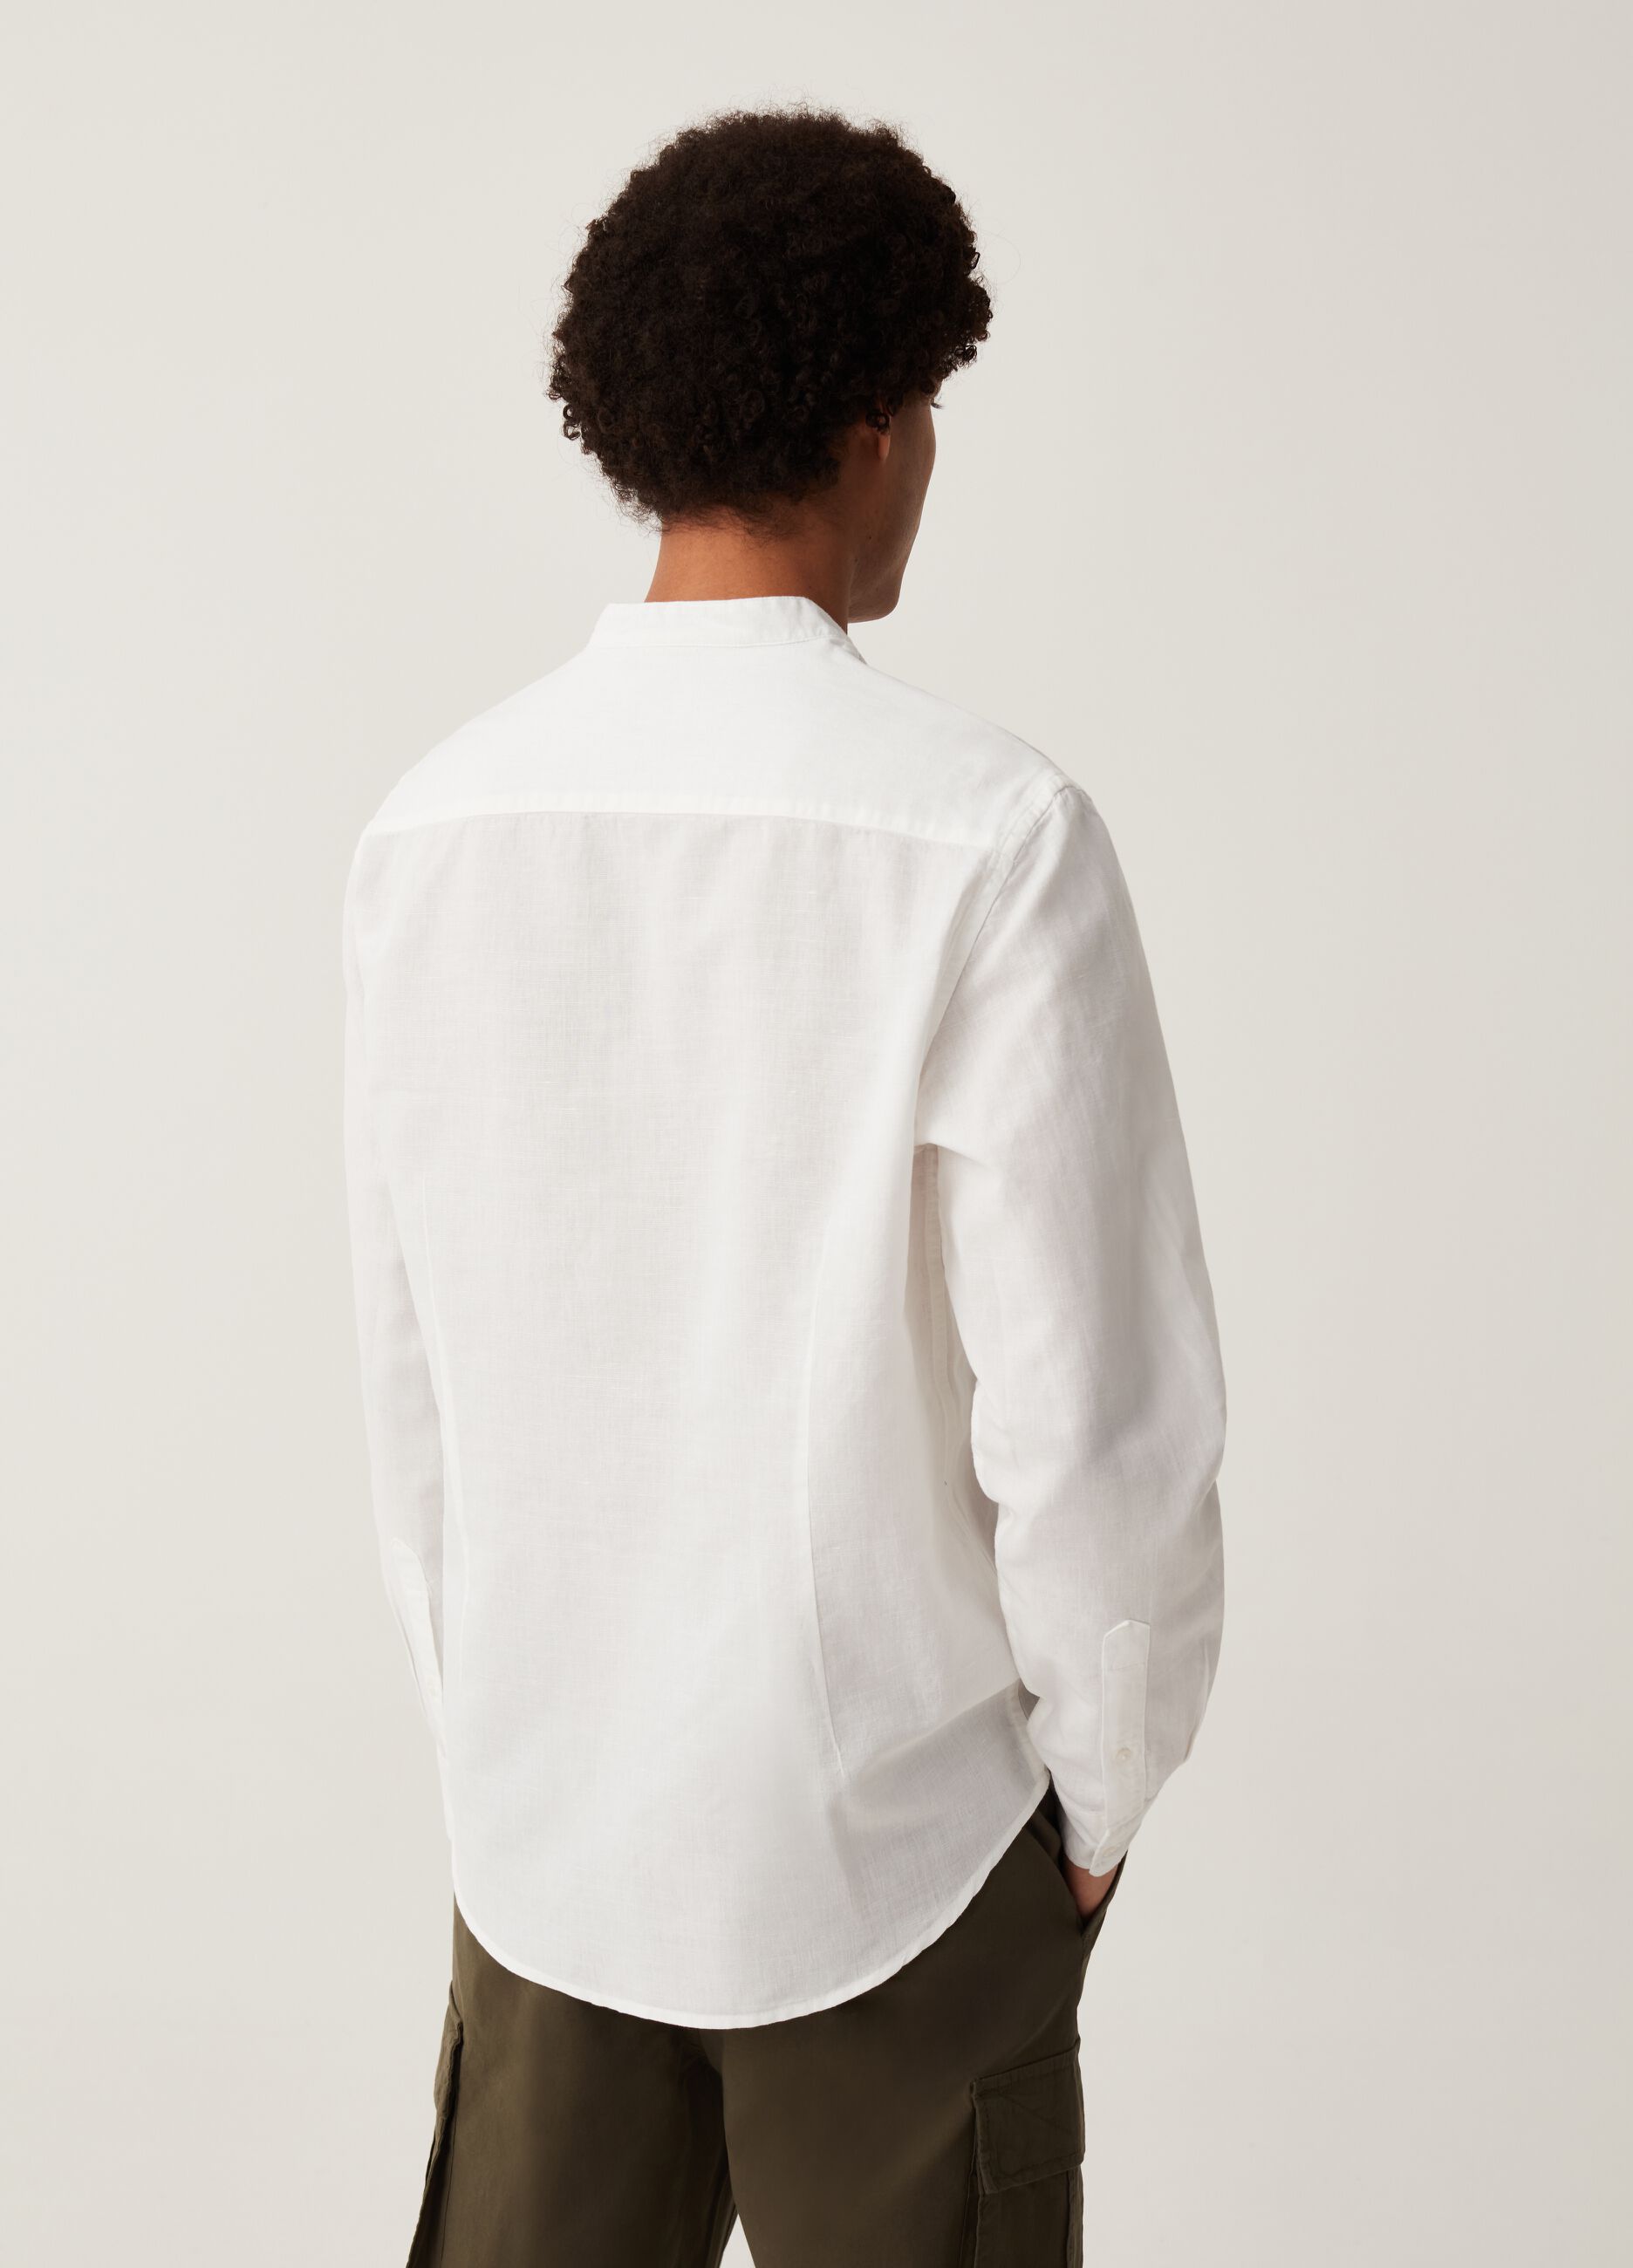 Grand&Hills regular-fit shirt in cotton and linen